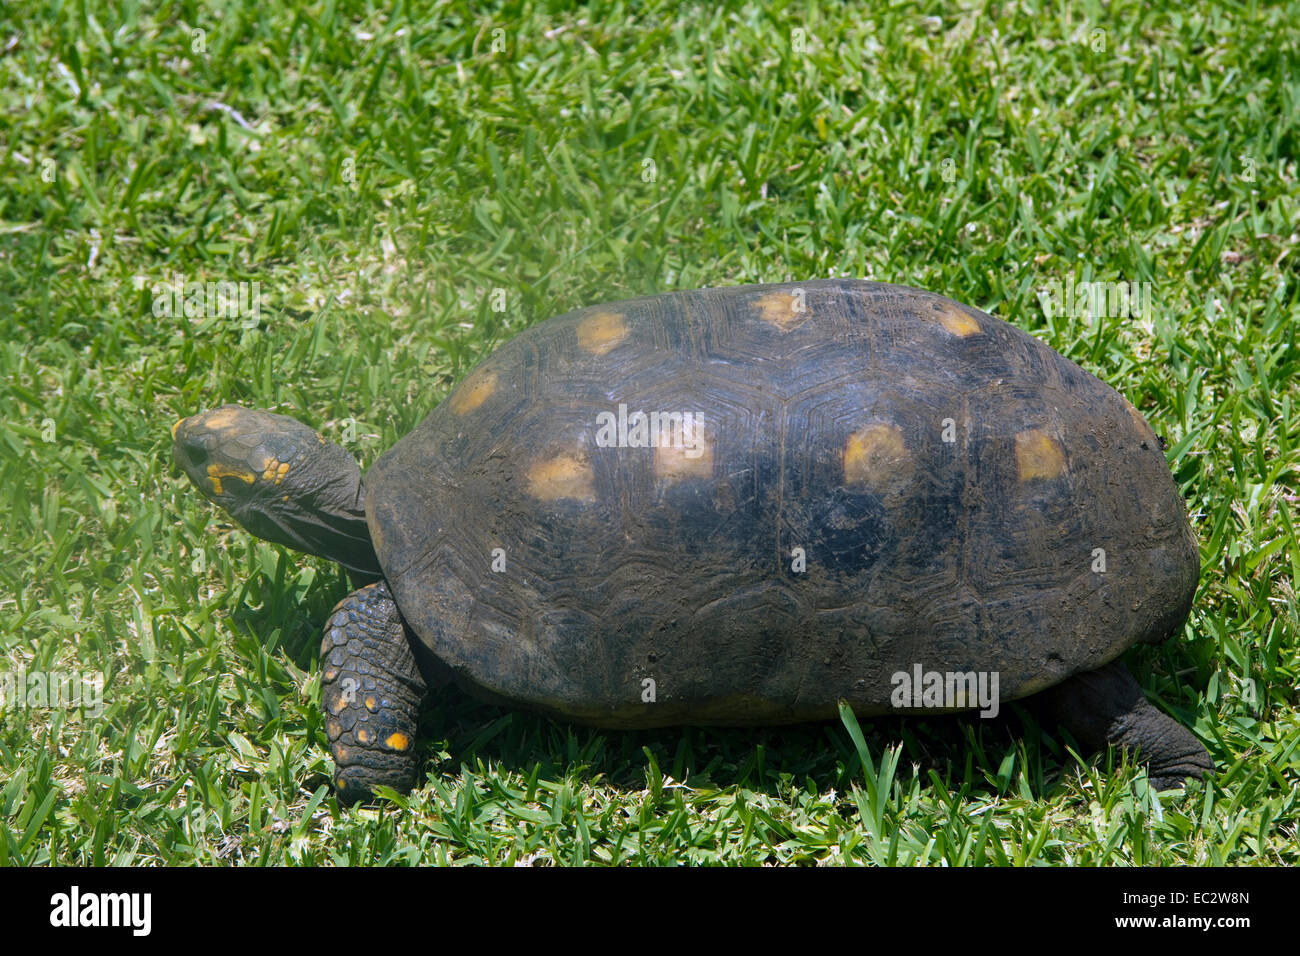 Tortoise on grass Grenada Caribbean Stock Photo